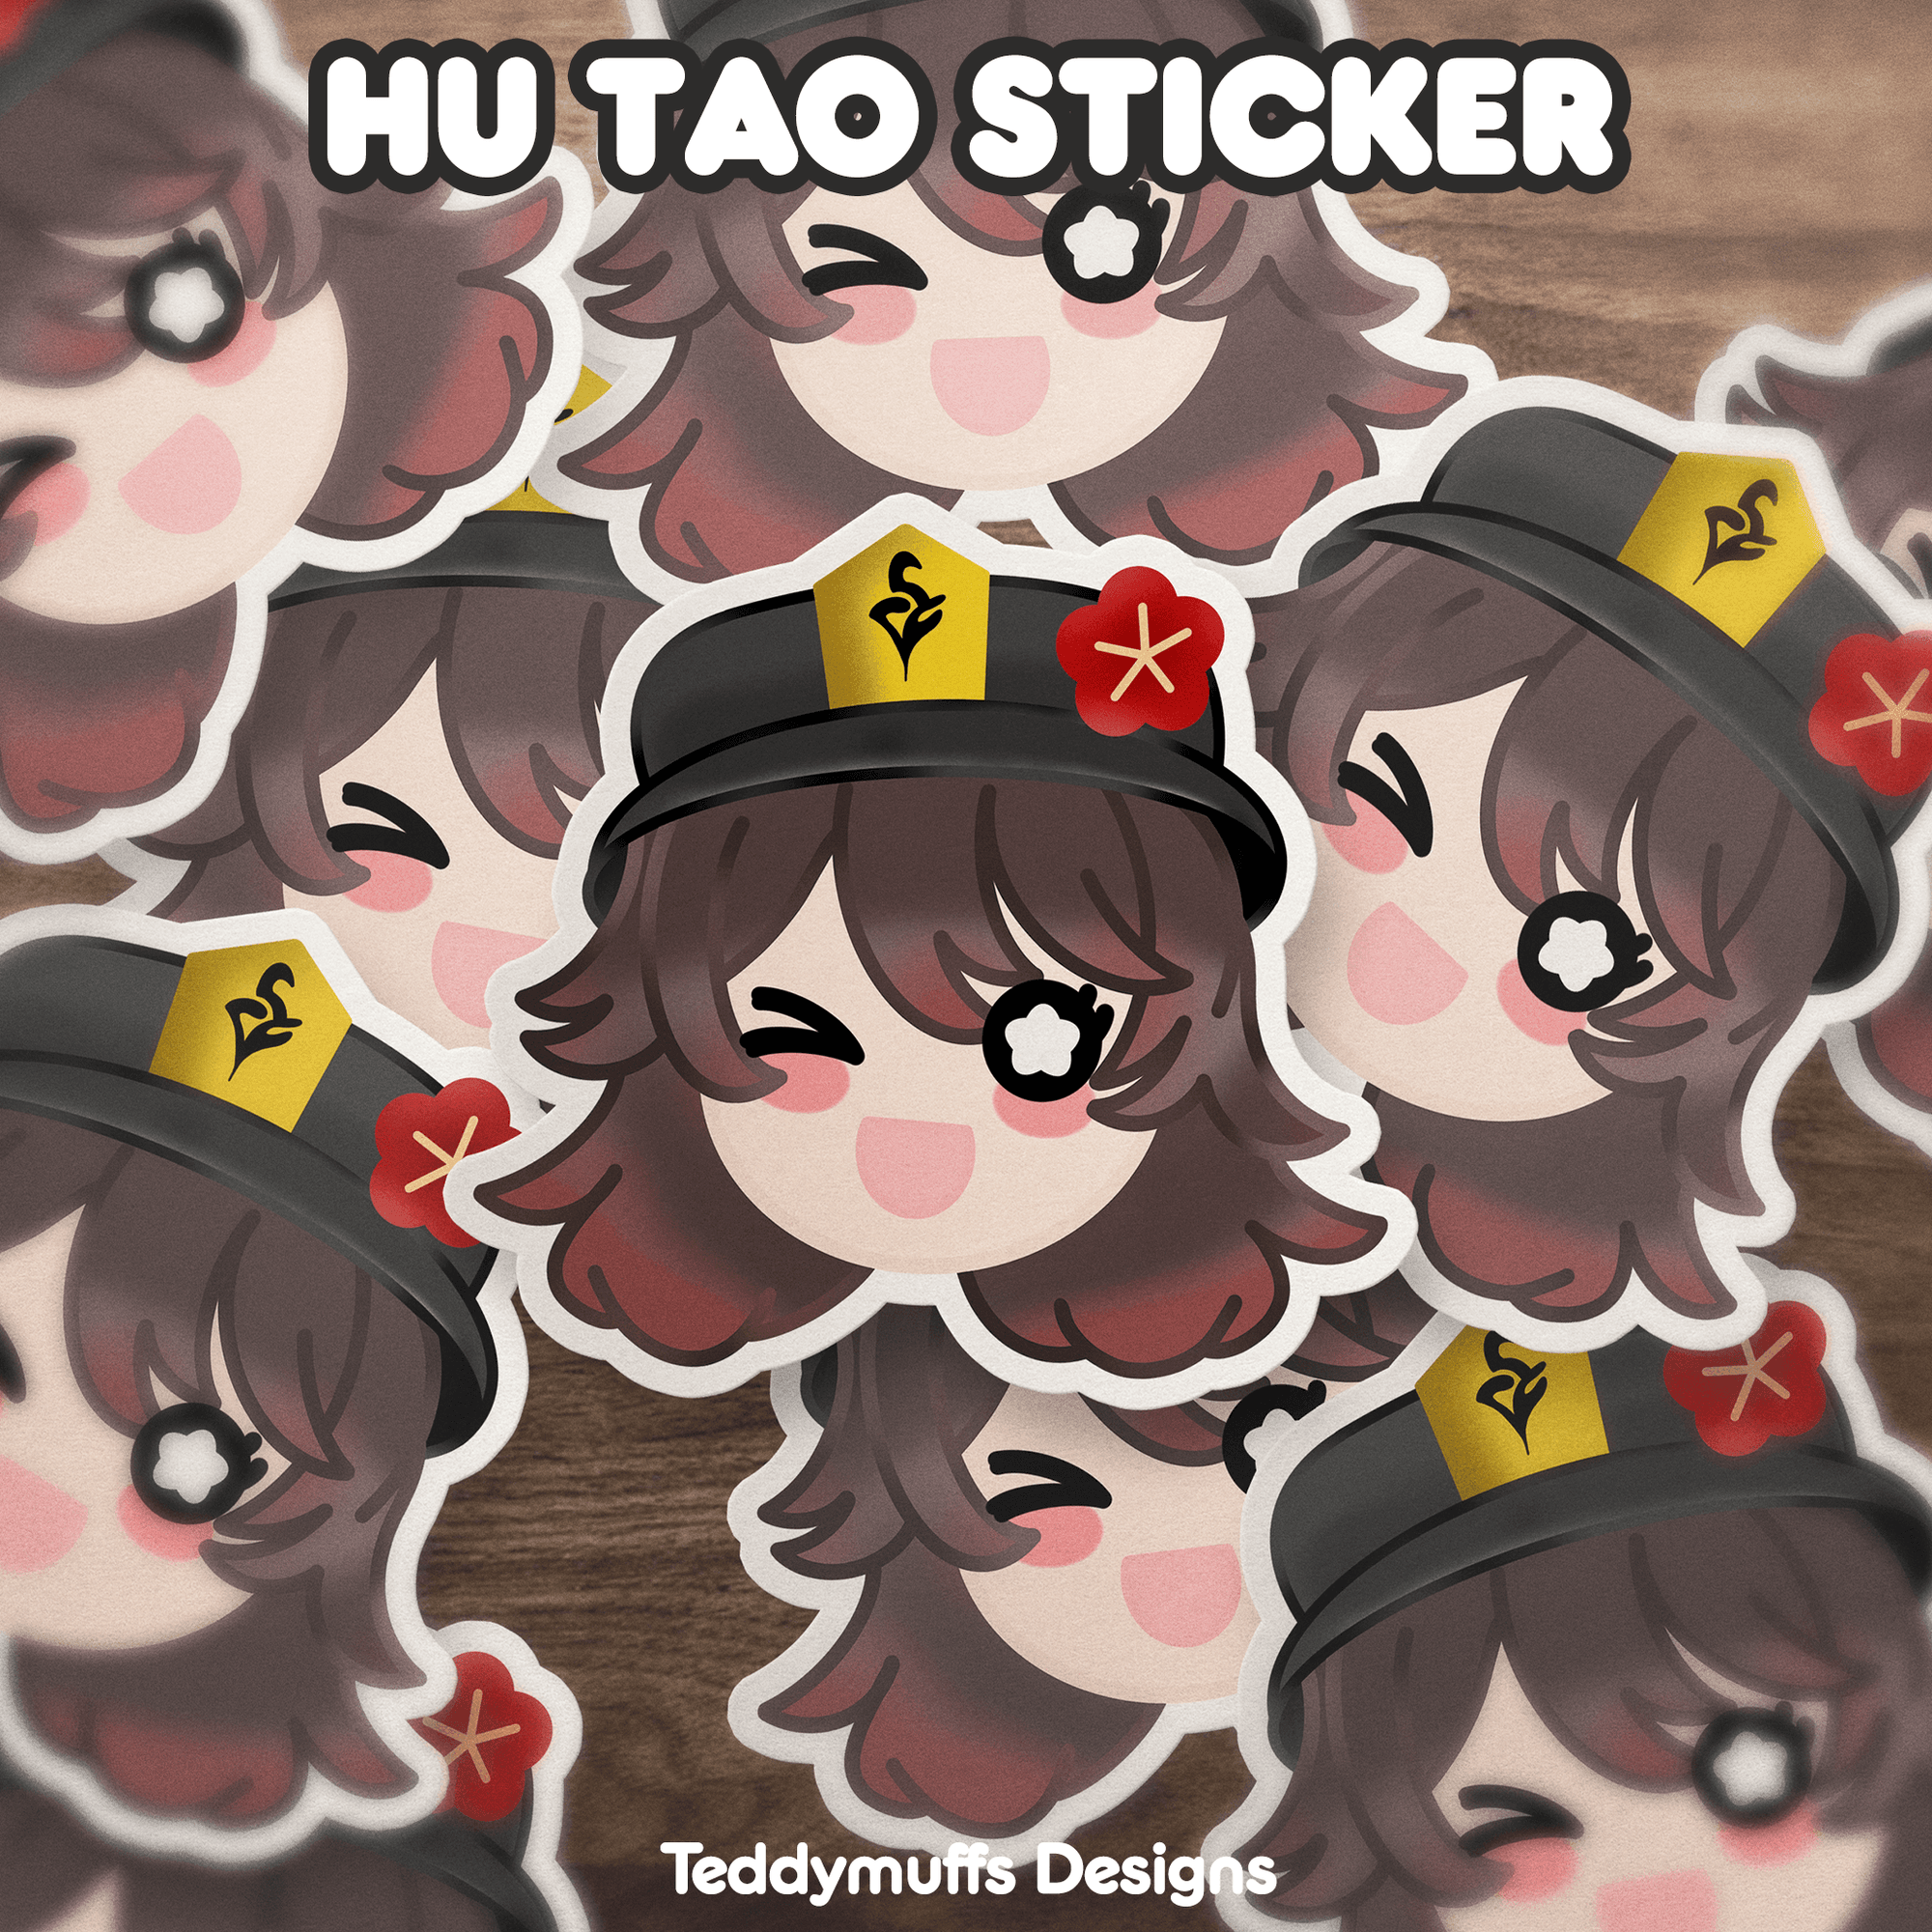 Hu Tao Sticker - Teddymuffs Designs